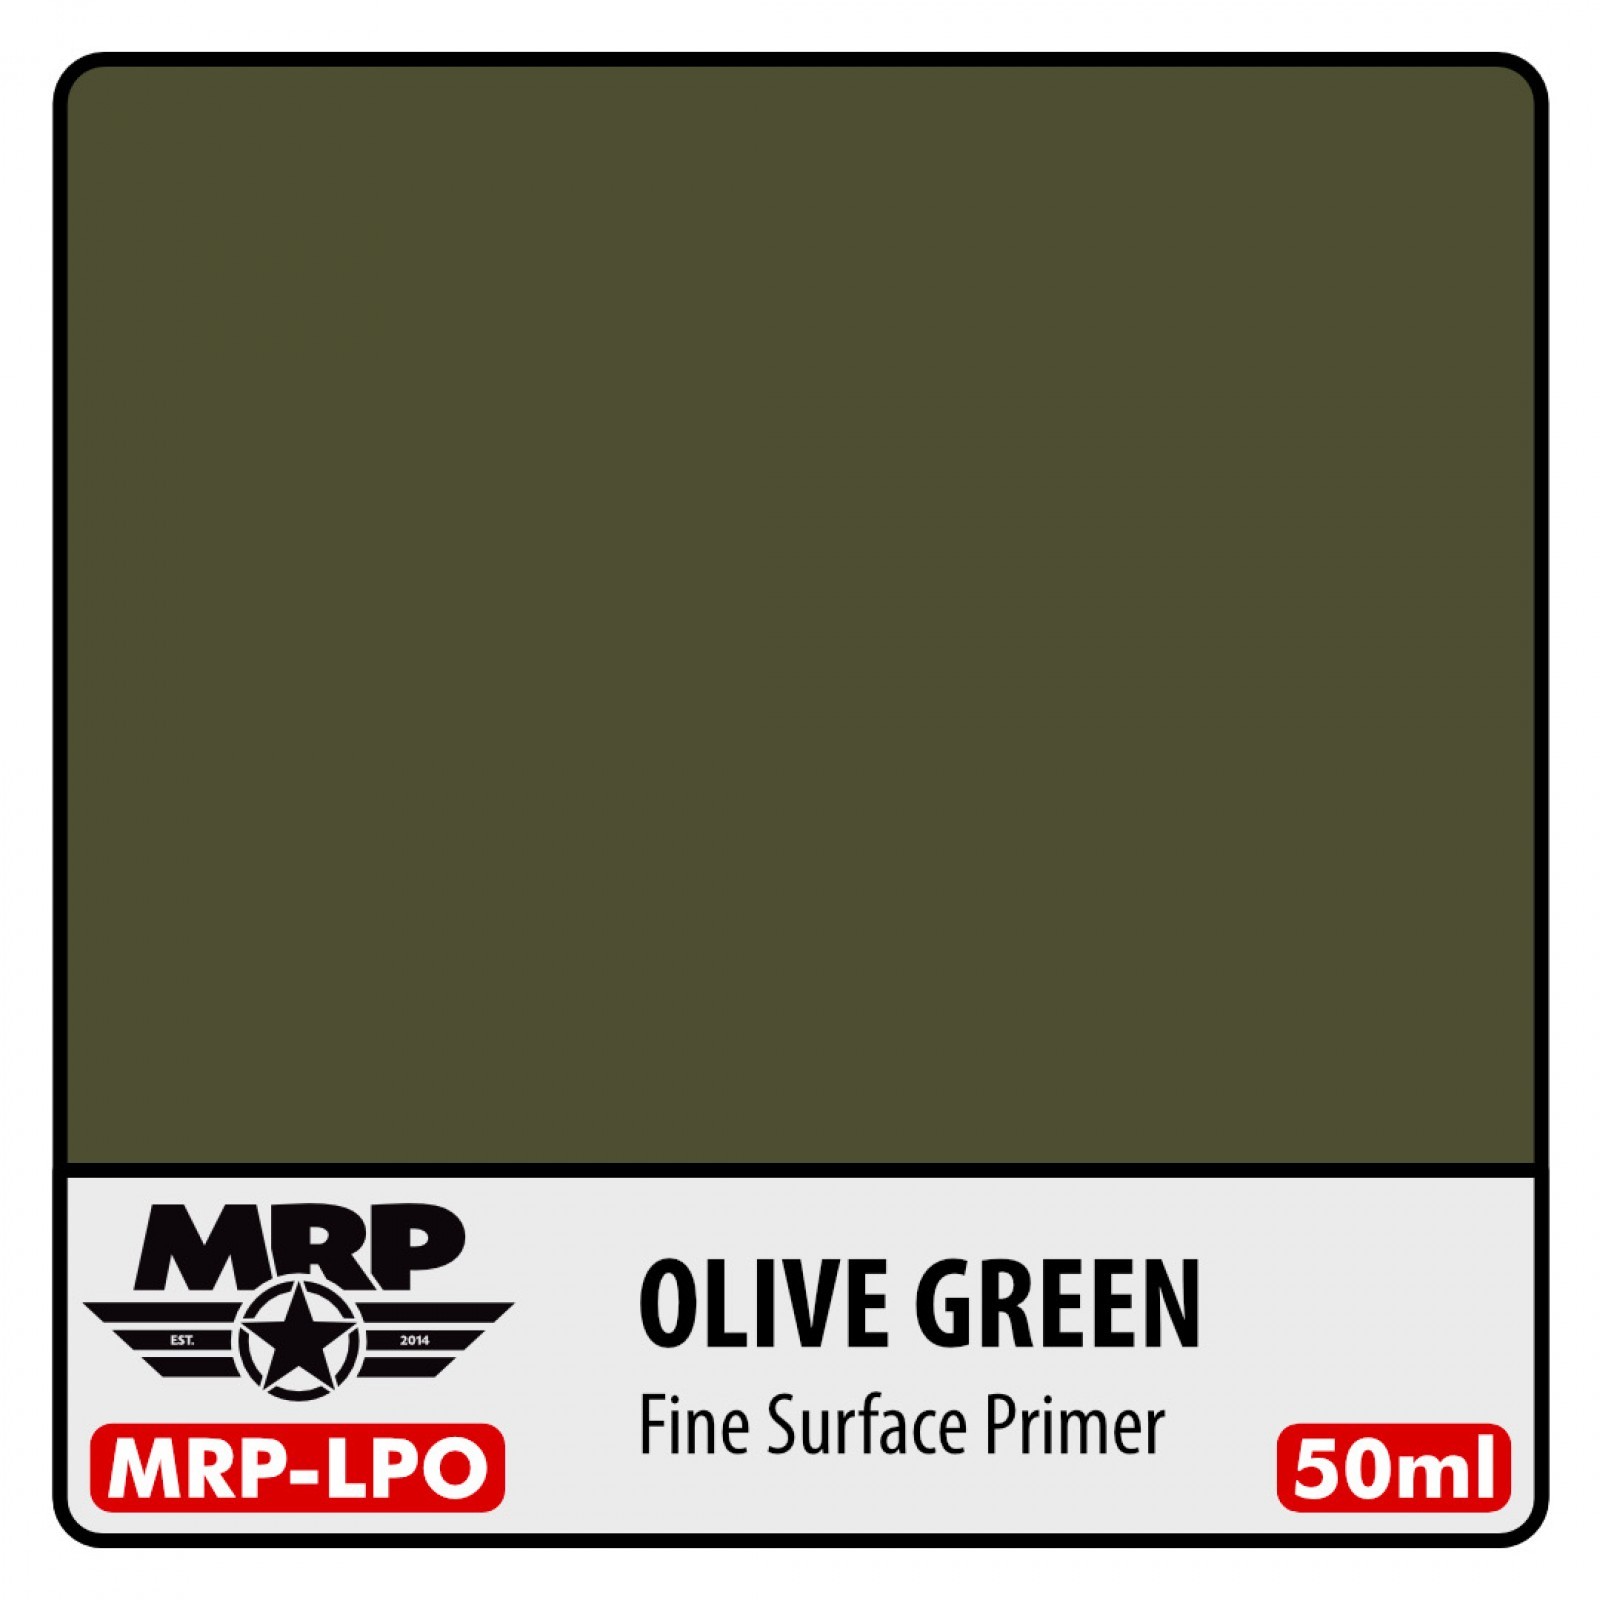 MR PAINT LPO FINE SURFACE PRIMER - OLIVE GREEN 50ml LAKER ASTAR BOYASI